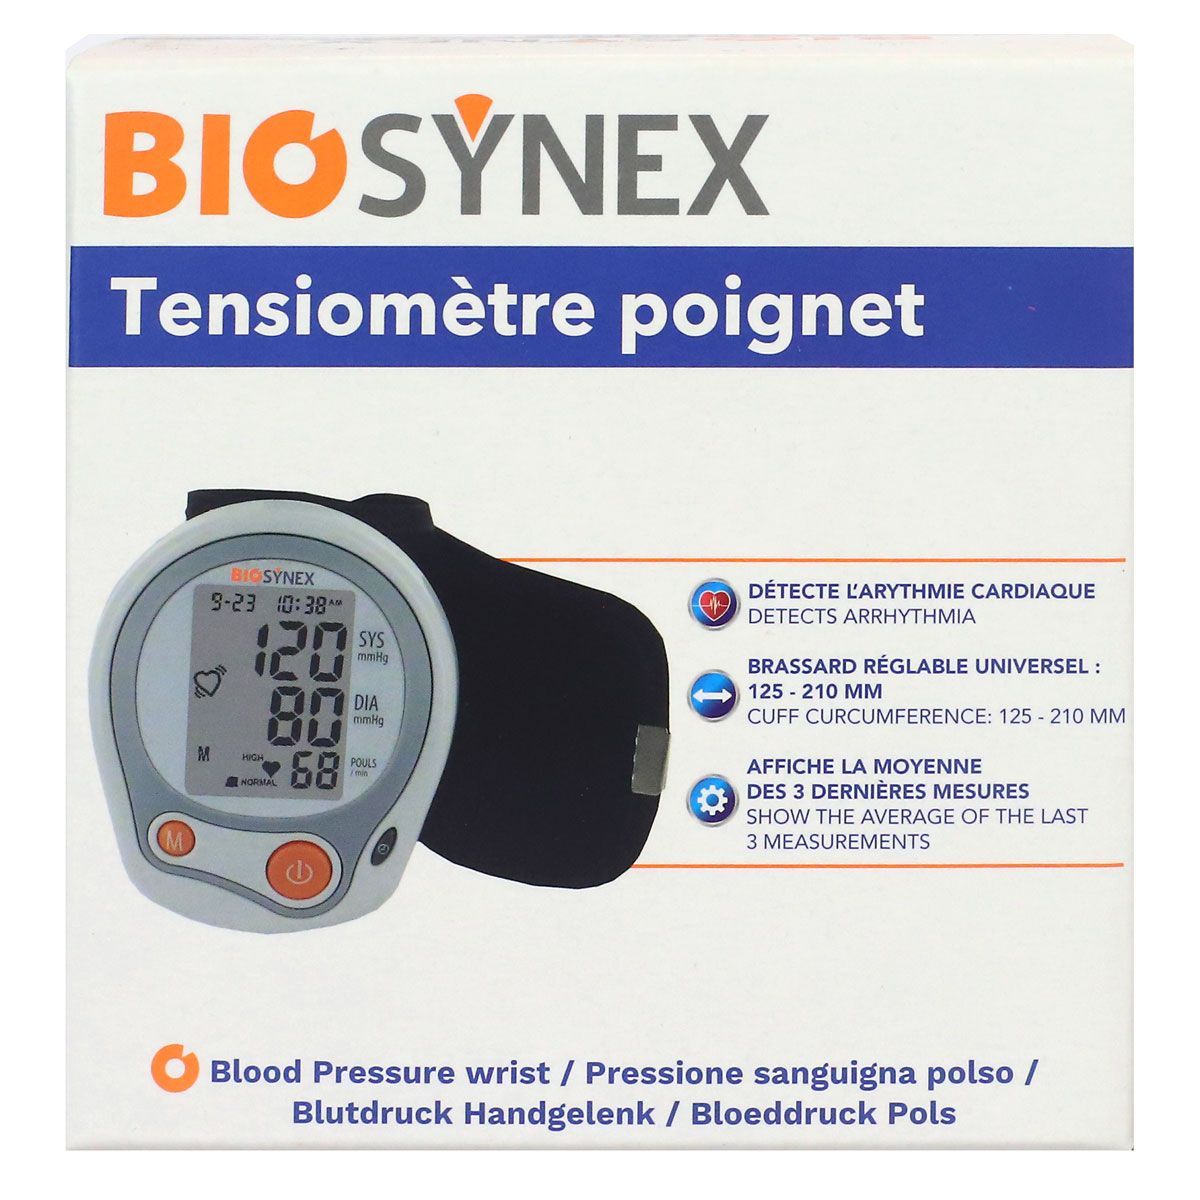 Tensiomètre poignet Exacto des Laboratoires Biosynex permet de mesurer la  tension artérielle.